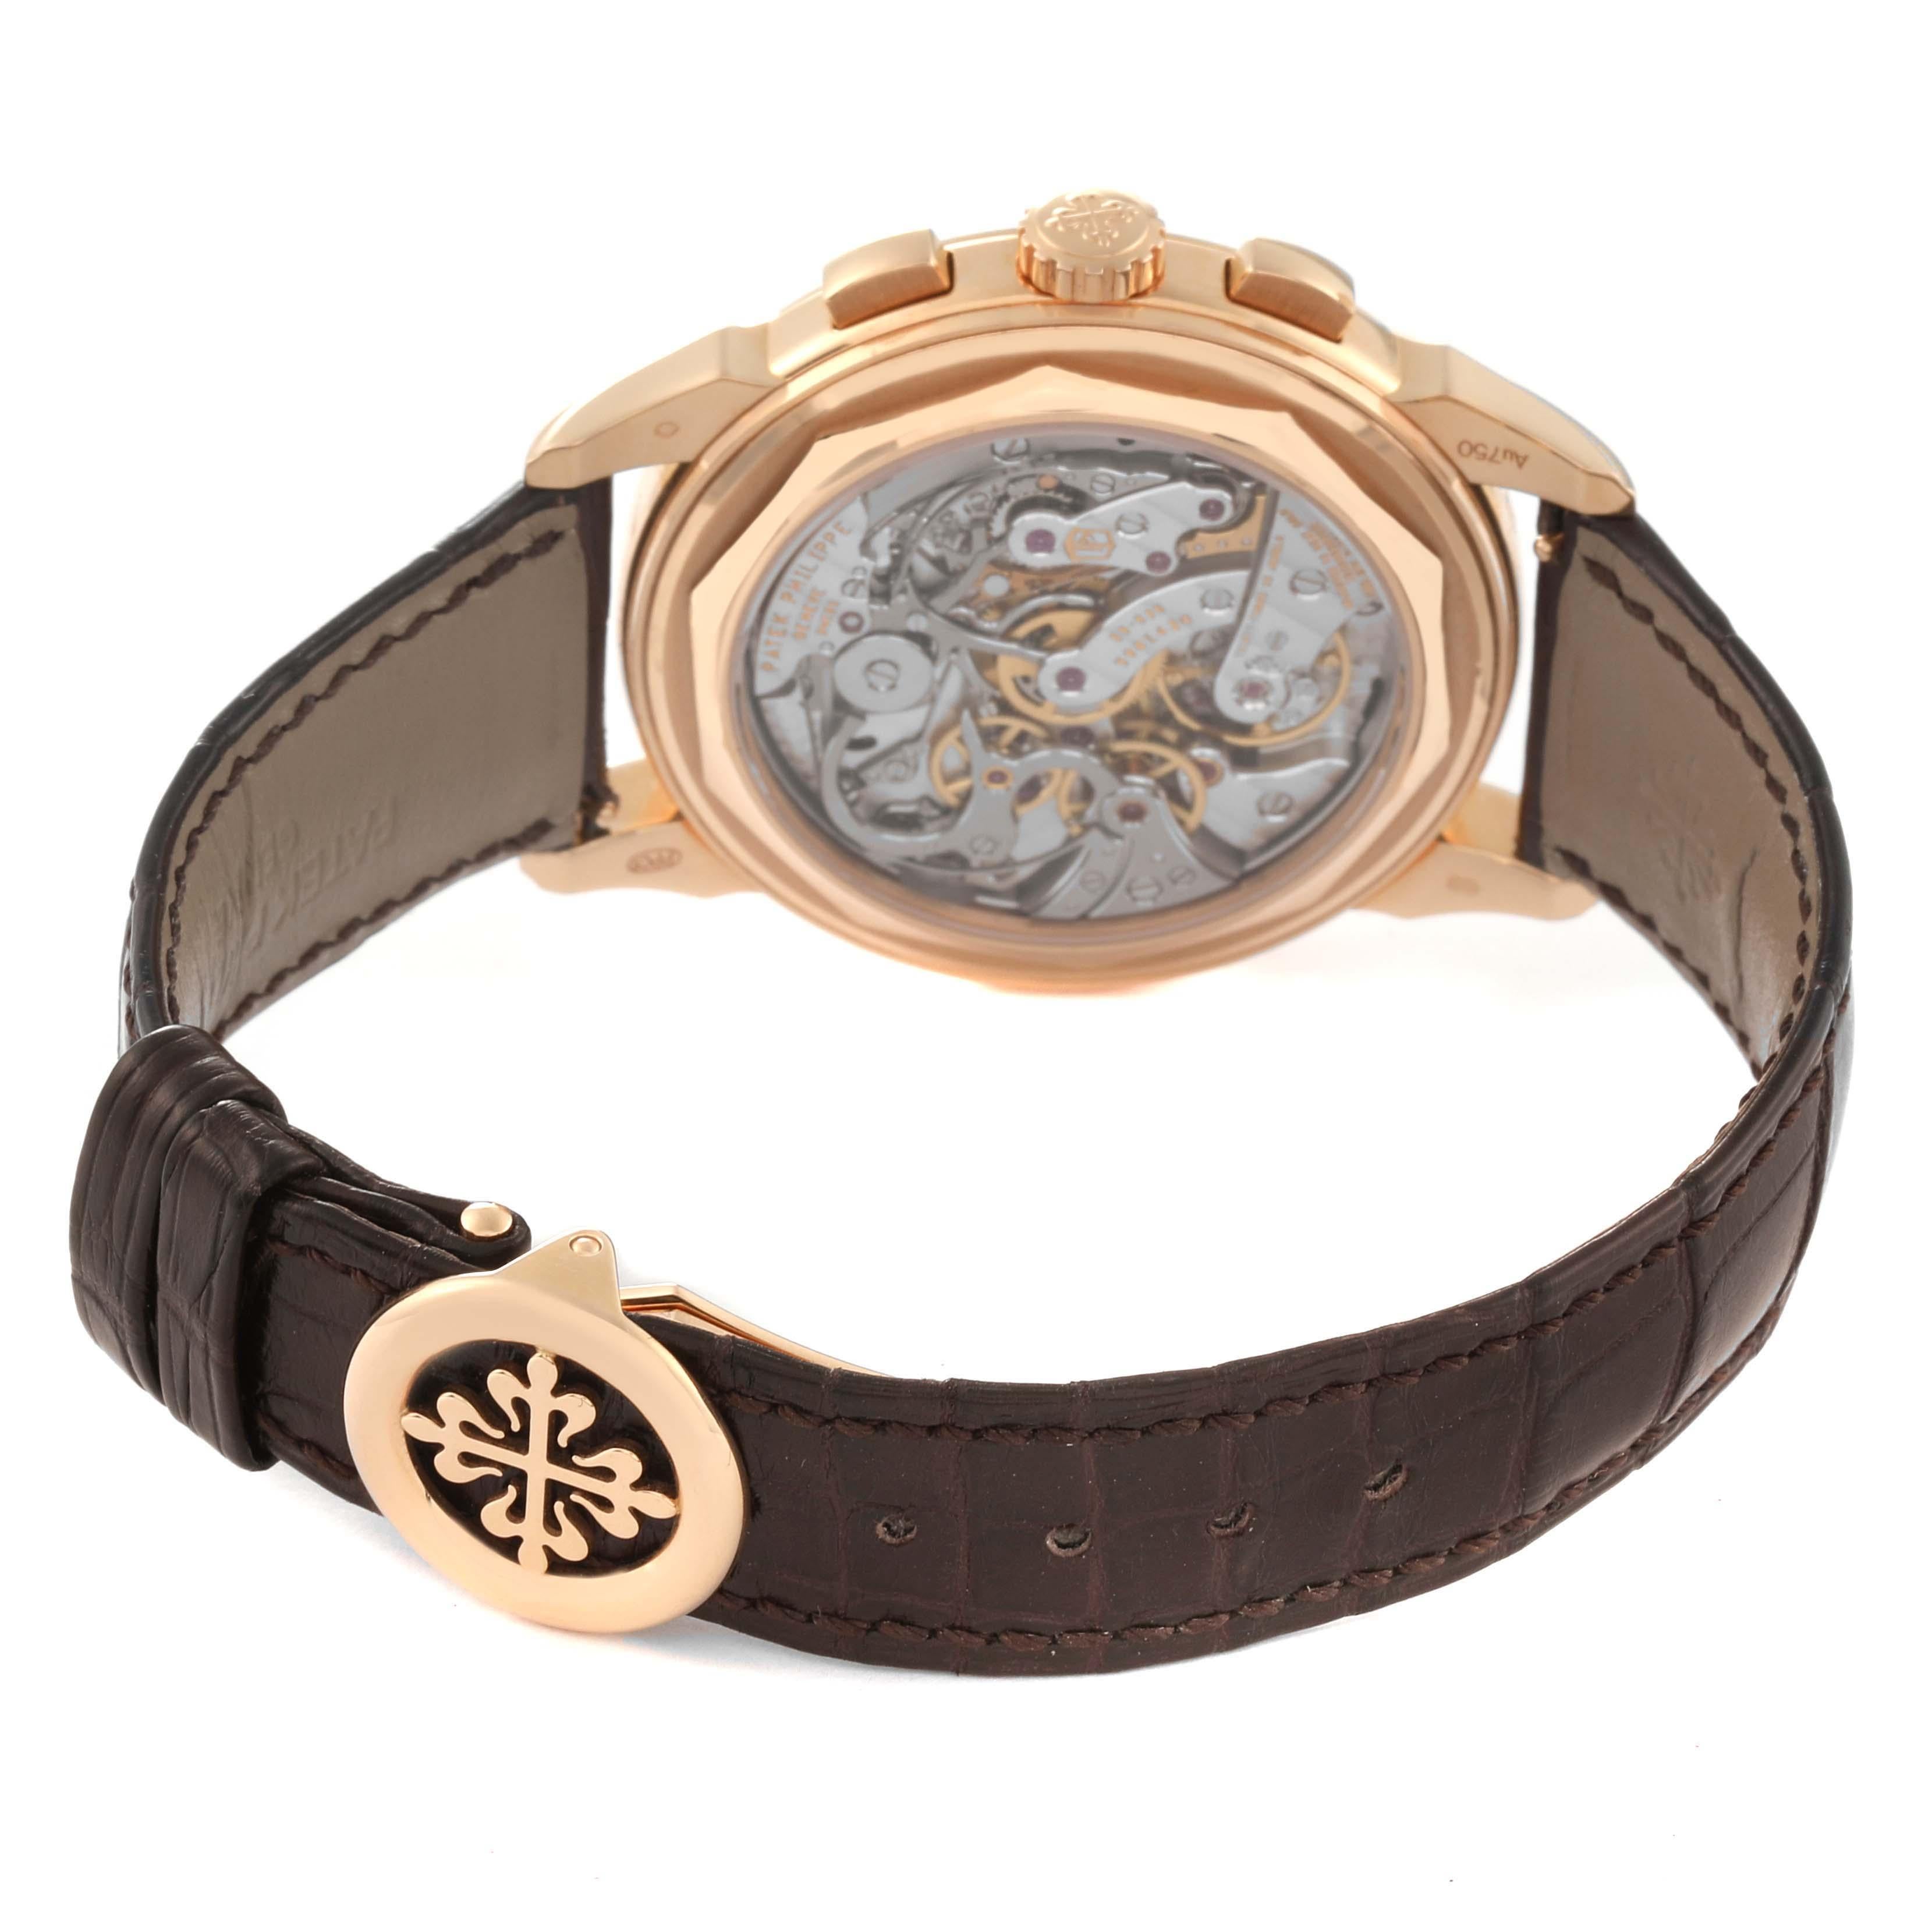 Patek Philippe Grand Complications Perpetual Calendar Rose Gold Watch 5270 3